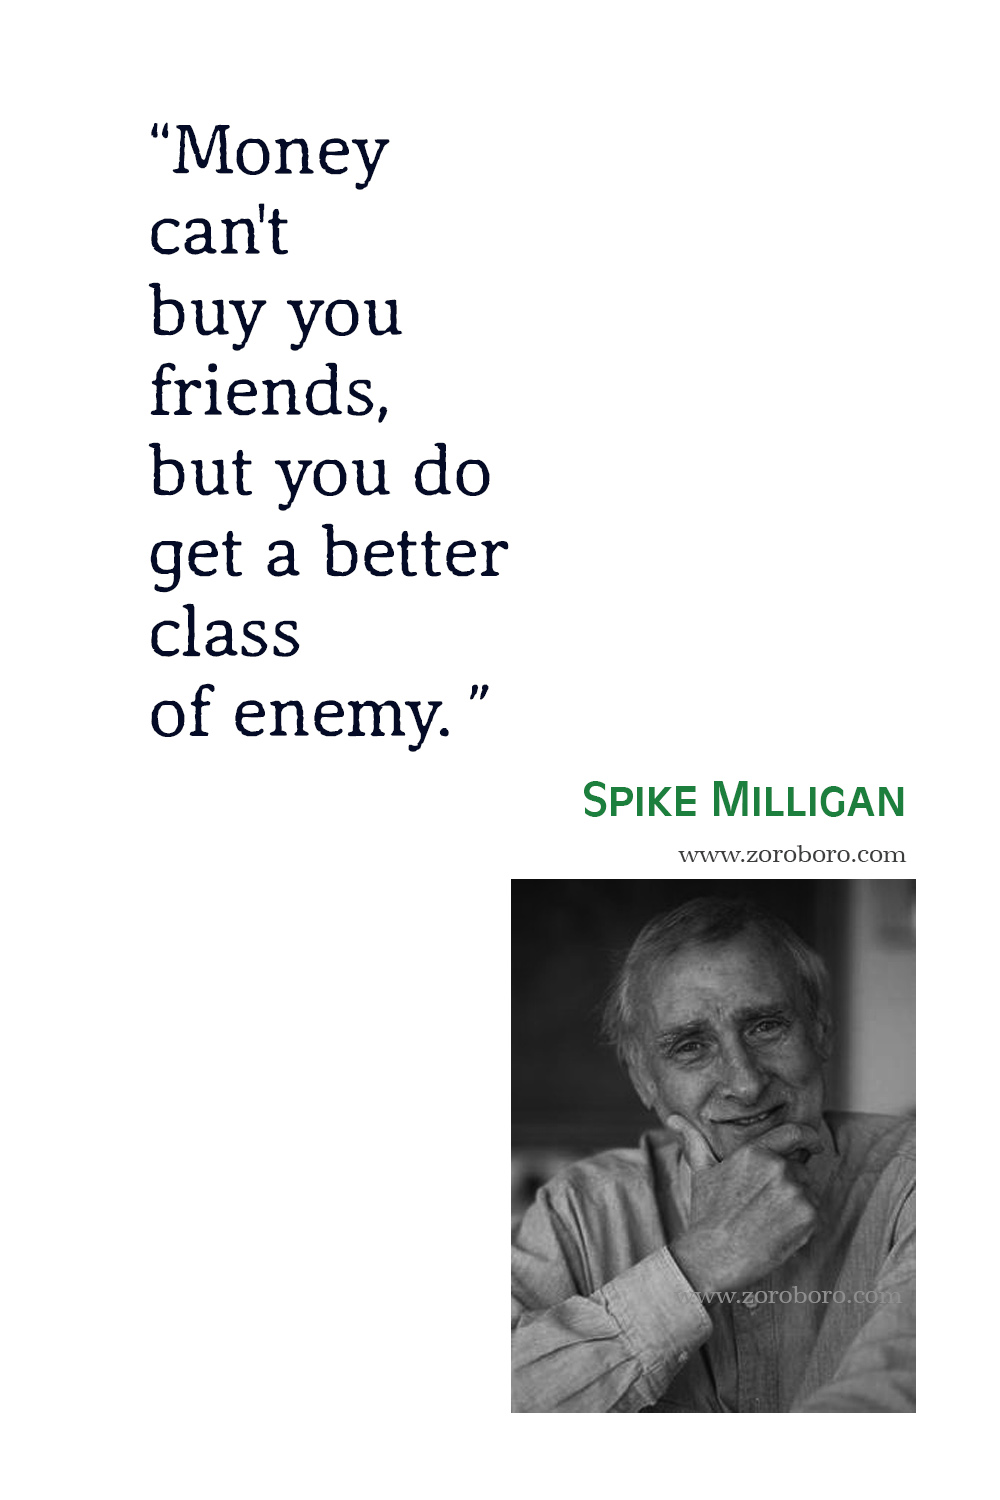 Spike Milligan Quotes, Spike Milligan Poems, Spike Milligan Funny Quotes, Spike Milligan Poetry, Spike Milligan.